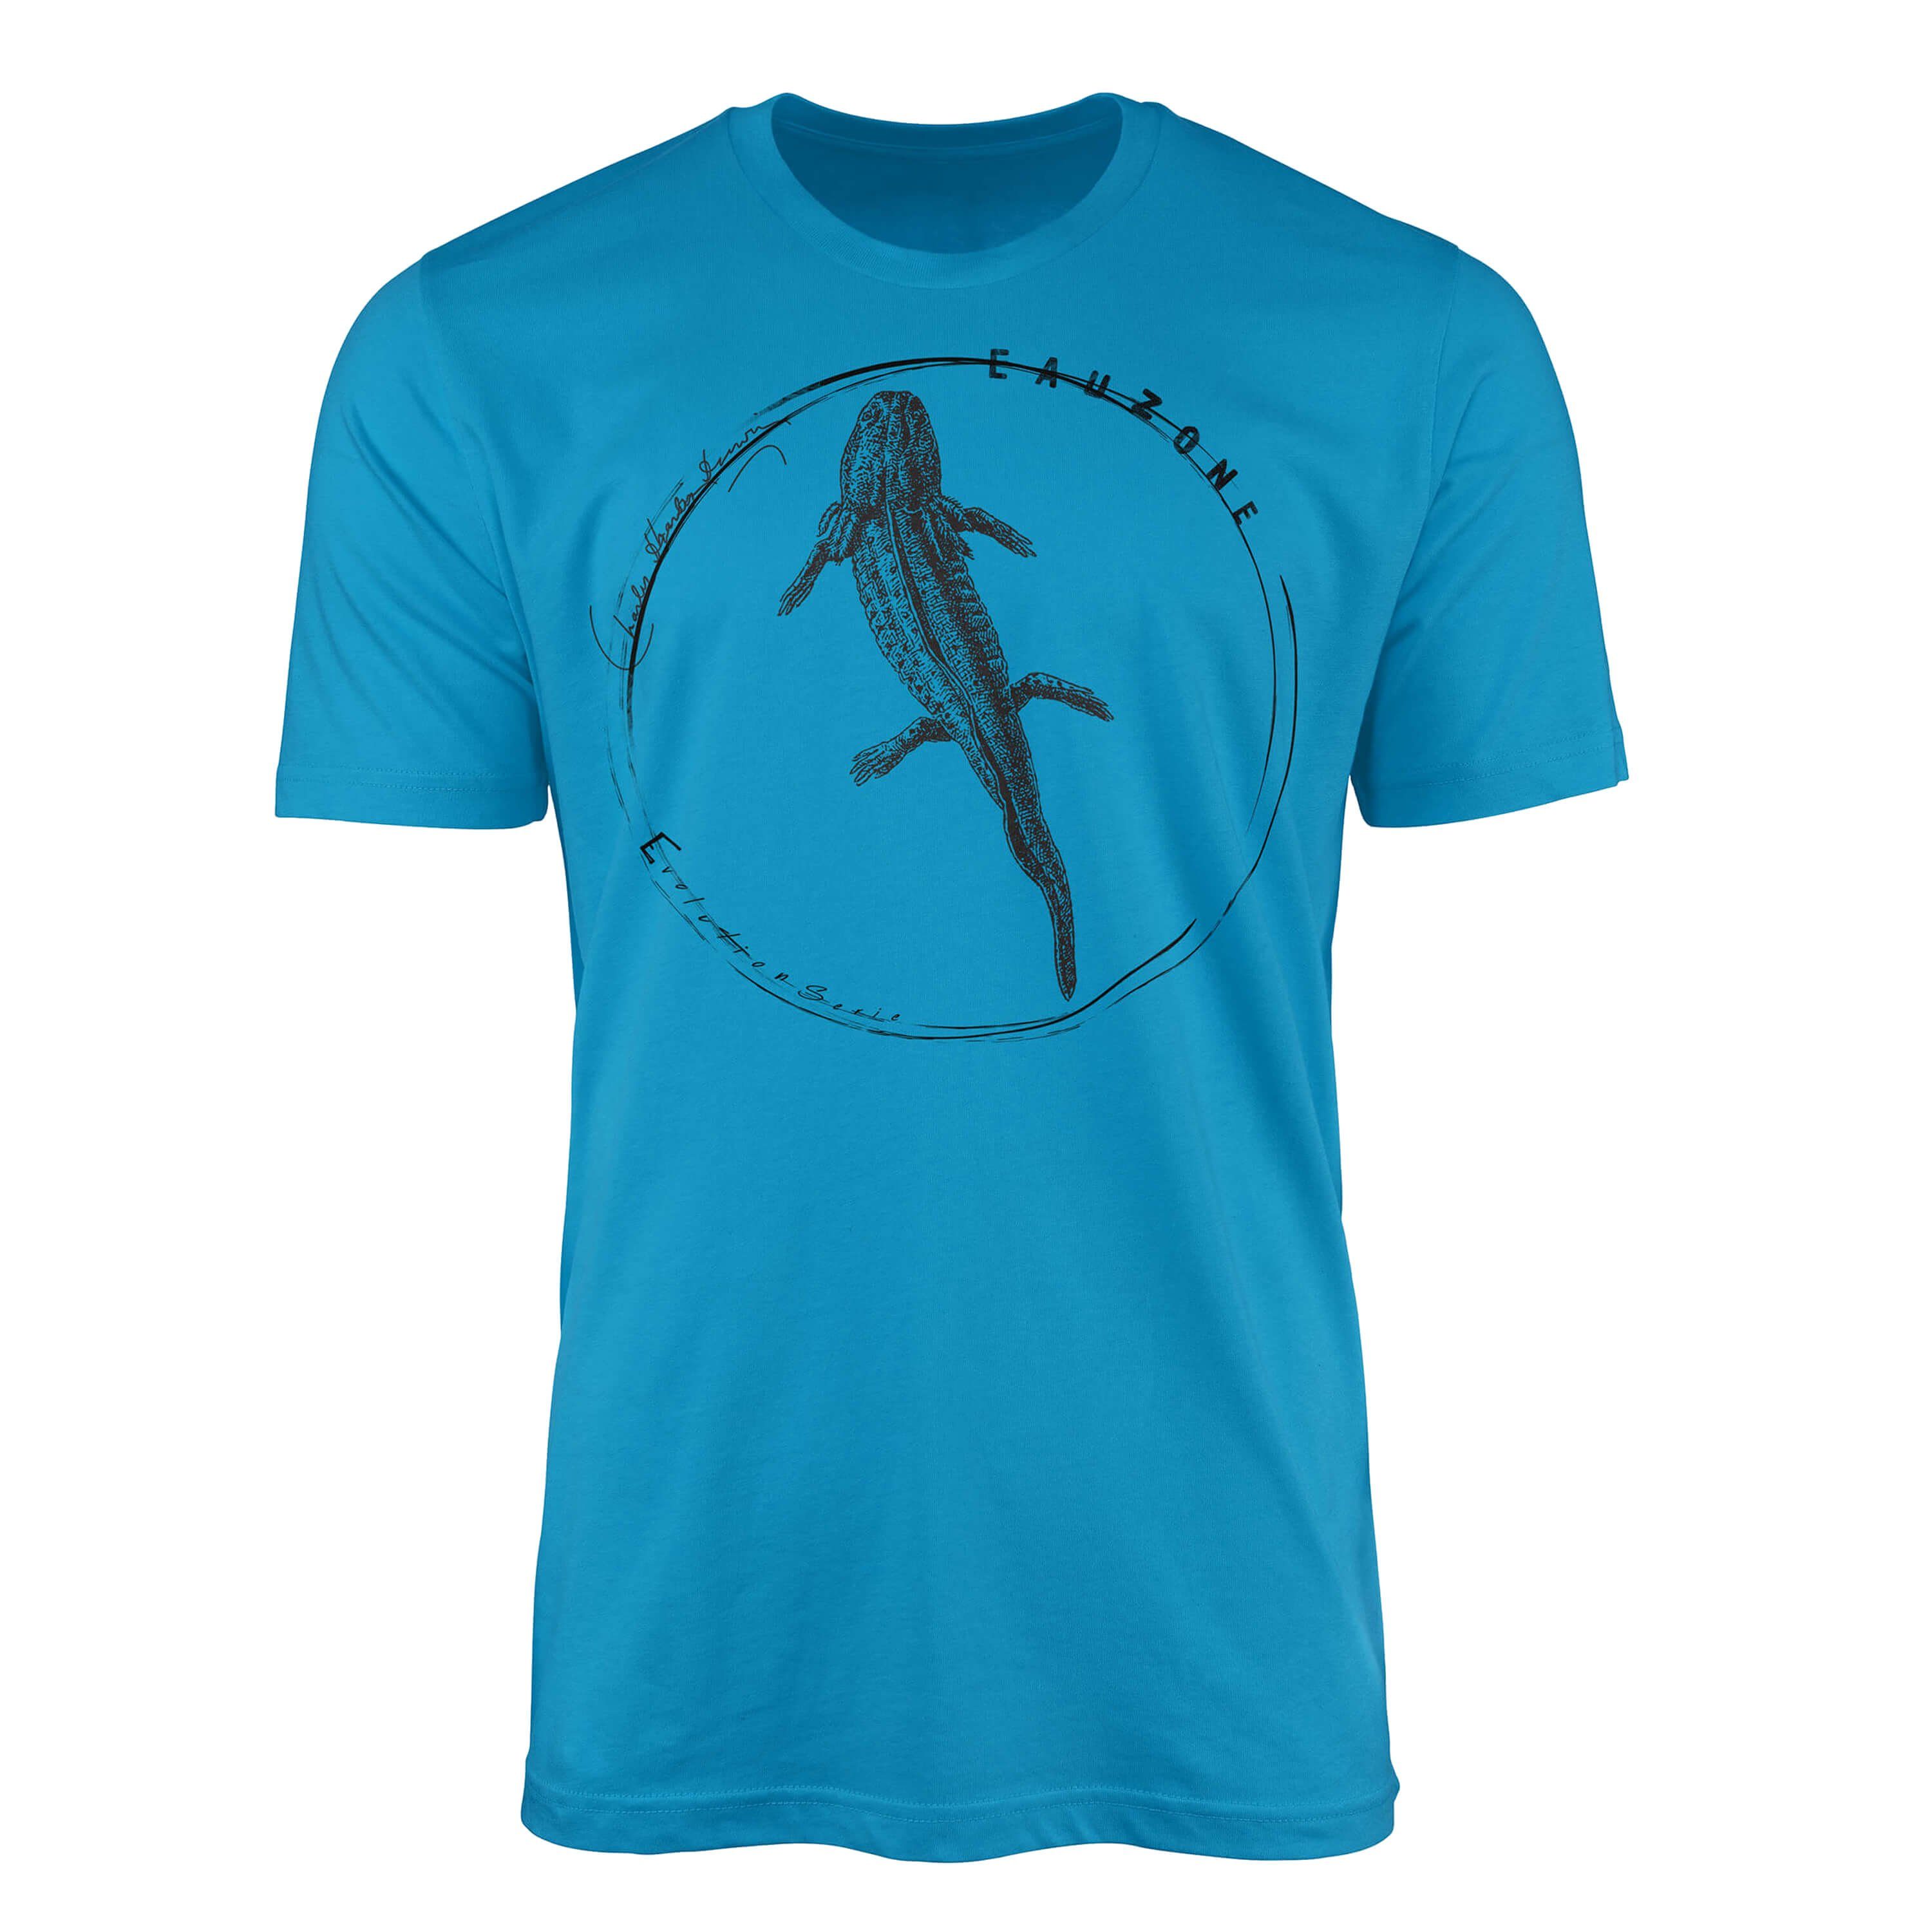 Kaufen Sie es jetzt, Originalprodukt Sinus Art T-Shirt T-Shirt Axolotl Evolution Herren Atoll